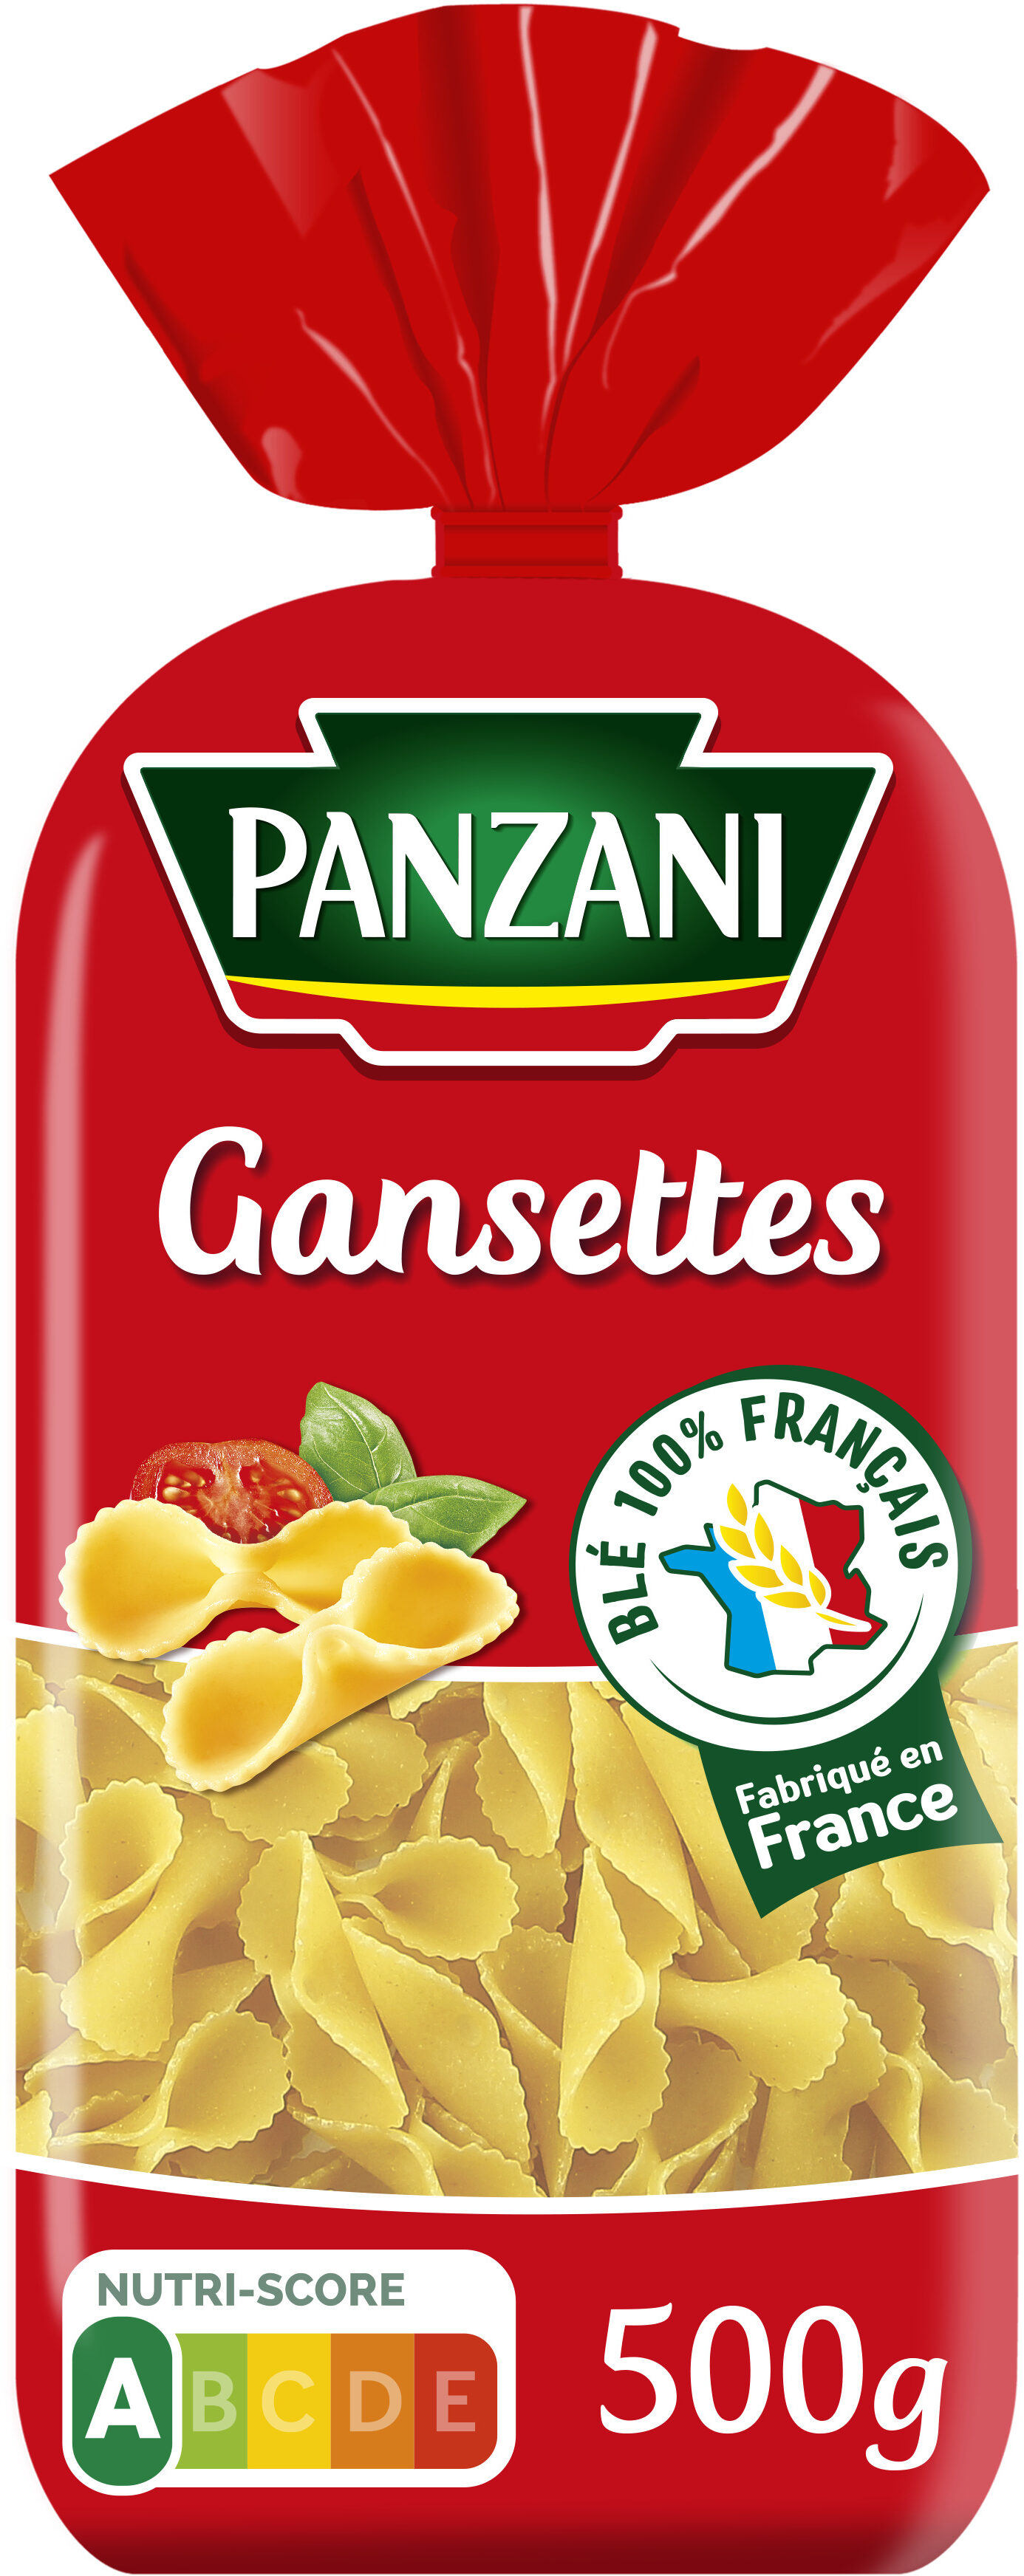 Panzani gansettes 500g - Produit